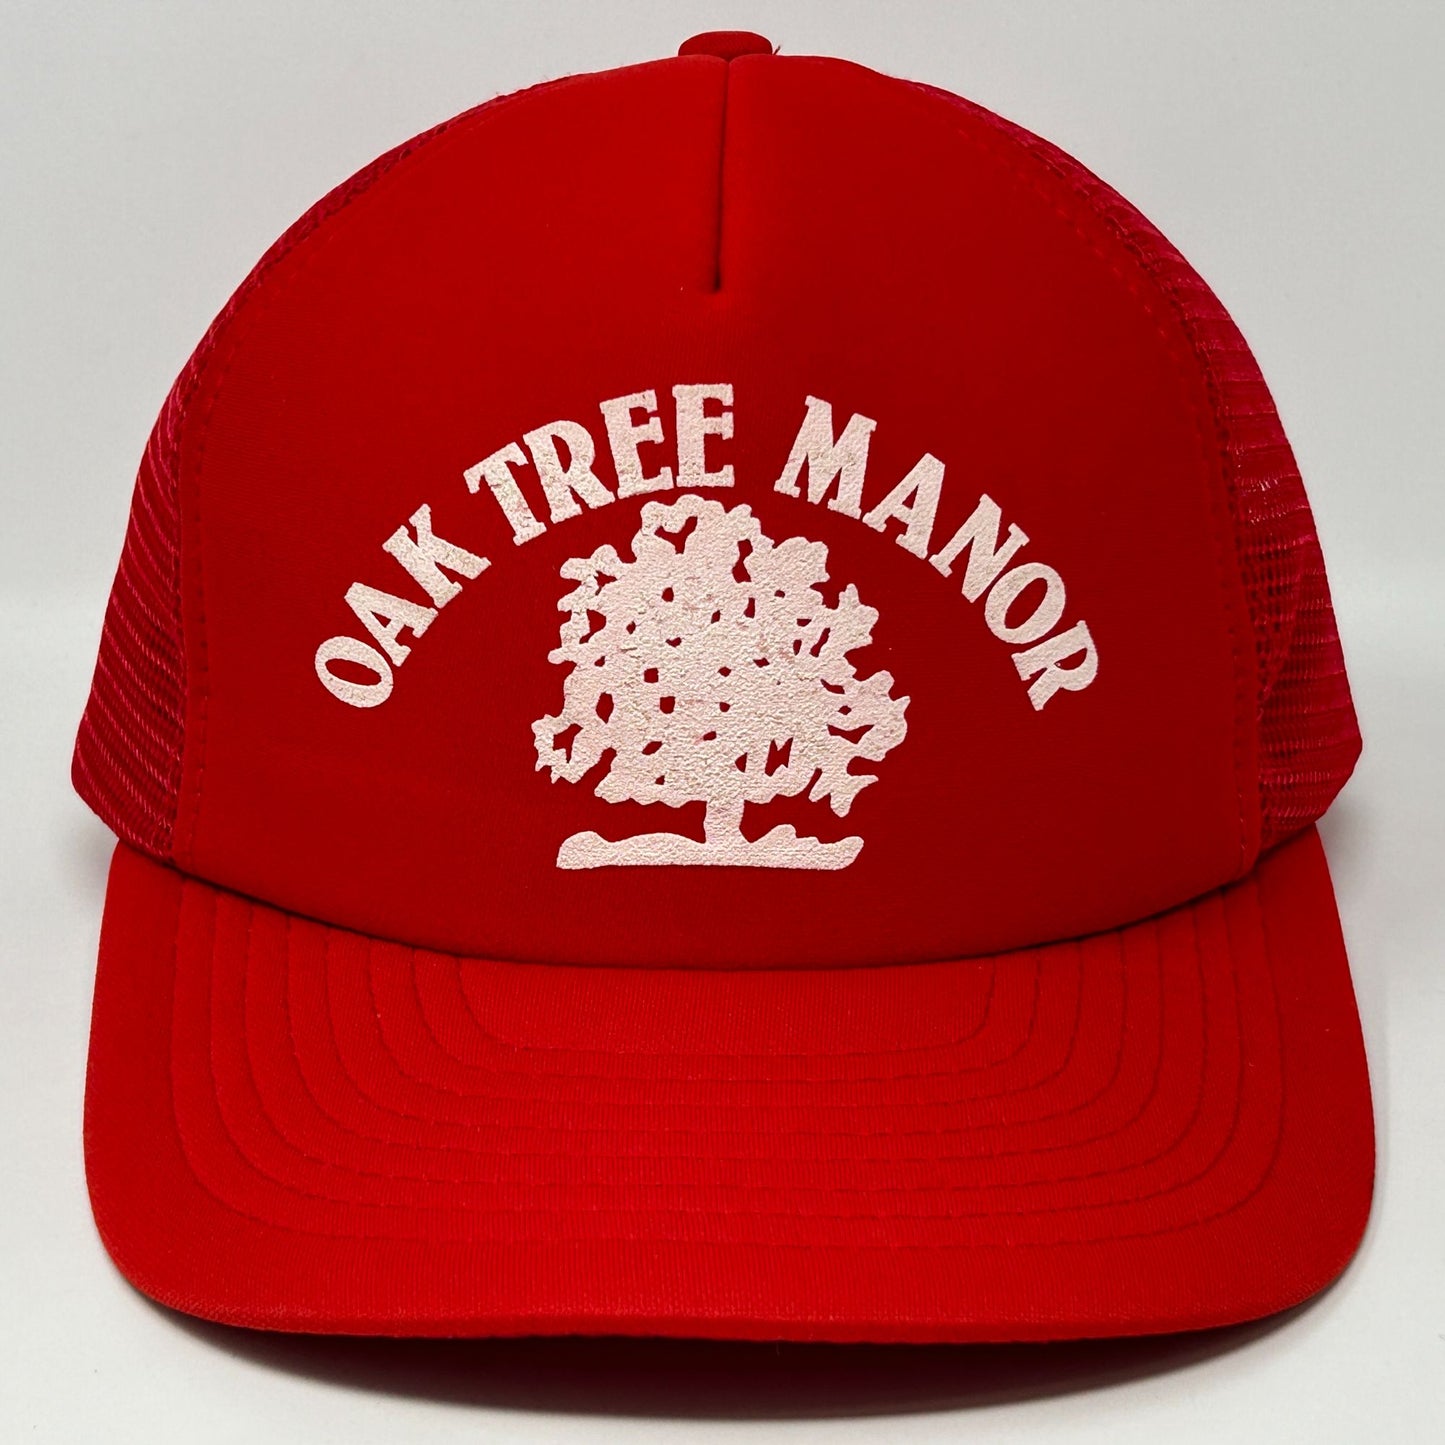 Oak Tree Manor 后扣卡车司机帽复古 80 年代春季德克萨斯州网状棒球帽